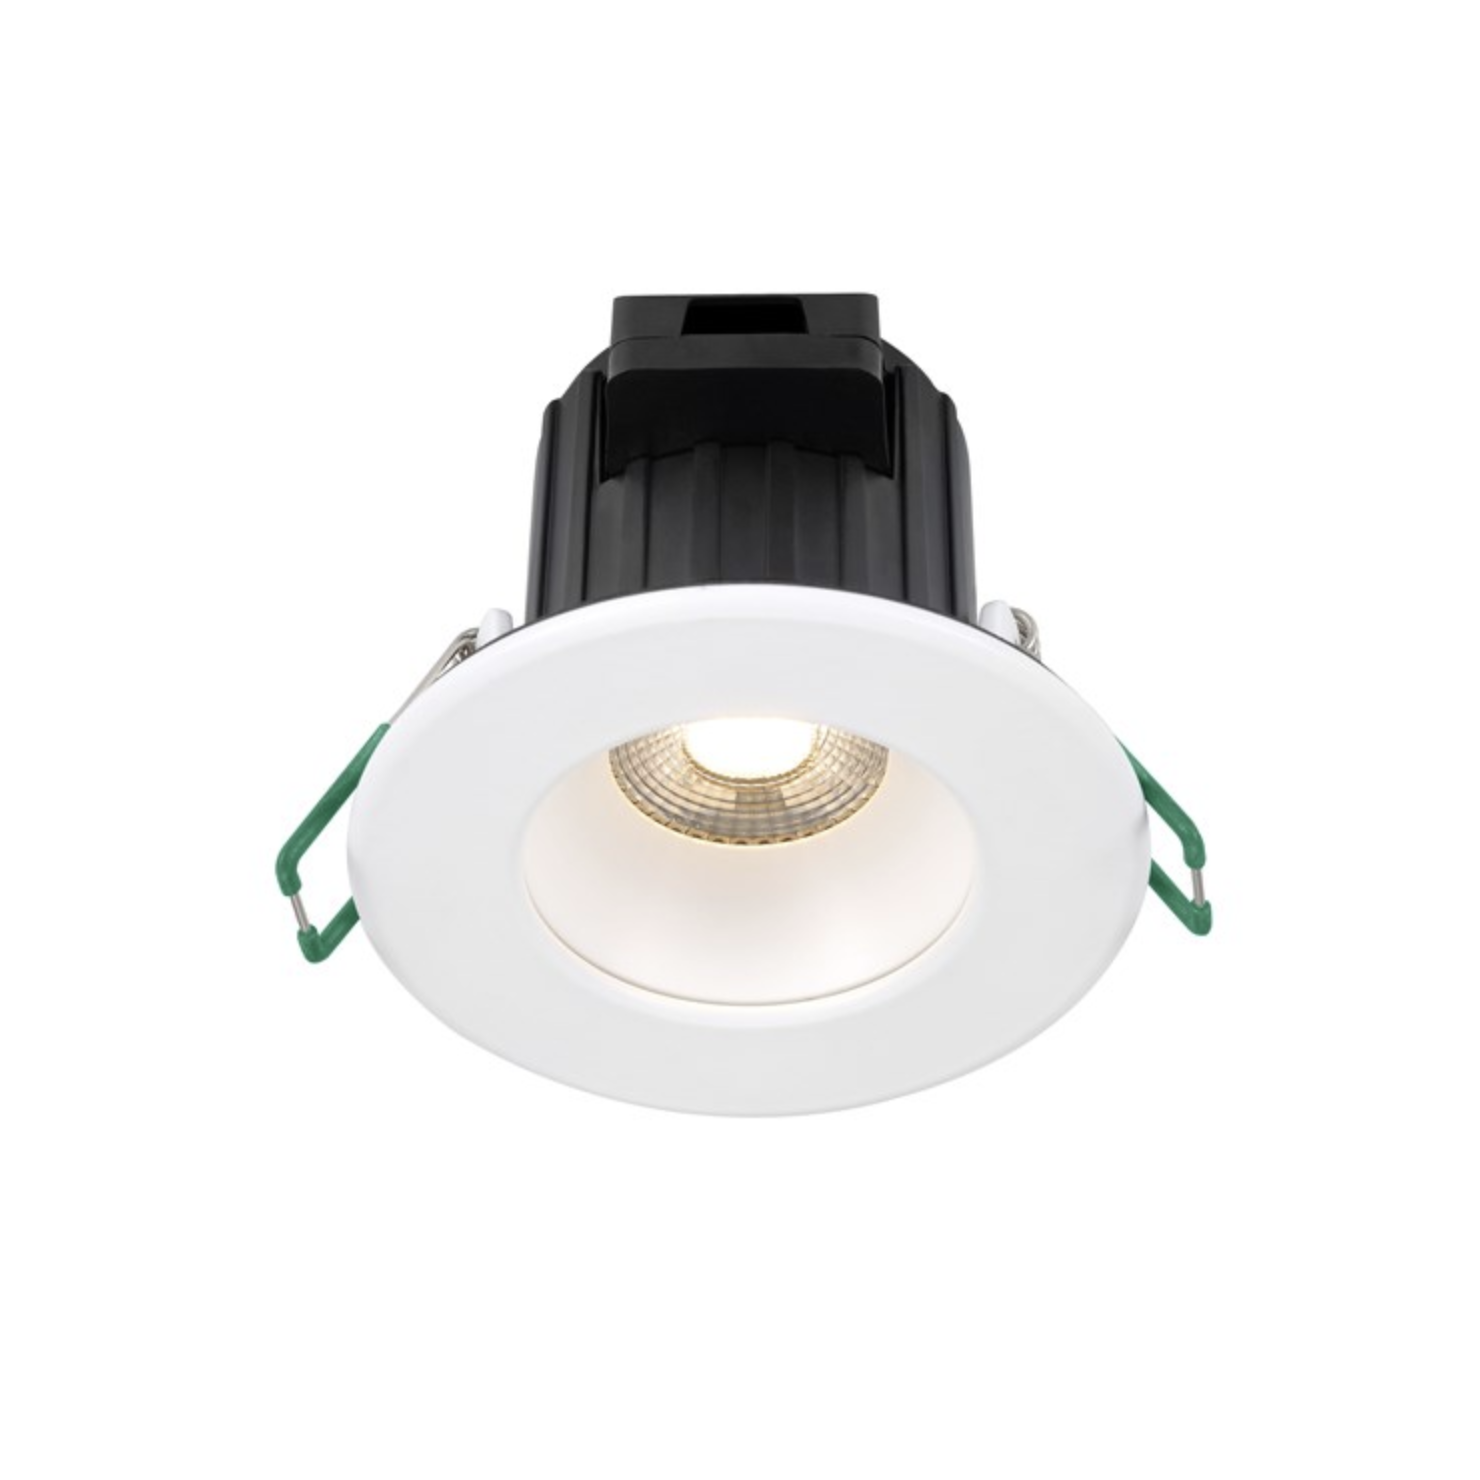 dreigen Reproduceren Vervloekt Sylvania Start Spot - inbouwspot - Ø 86 mm, 72 mm inbouwmaat - 9W dimbare  LED incl. - IP65 - 4000K - wit | Lichtkoning